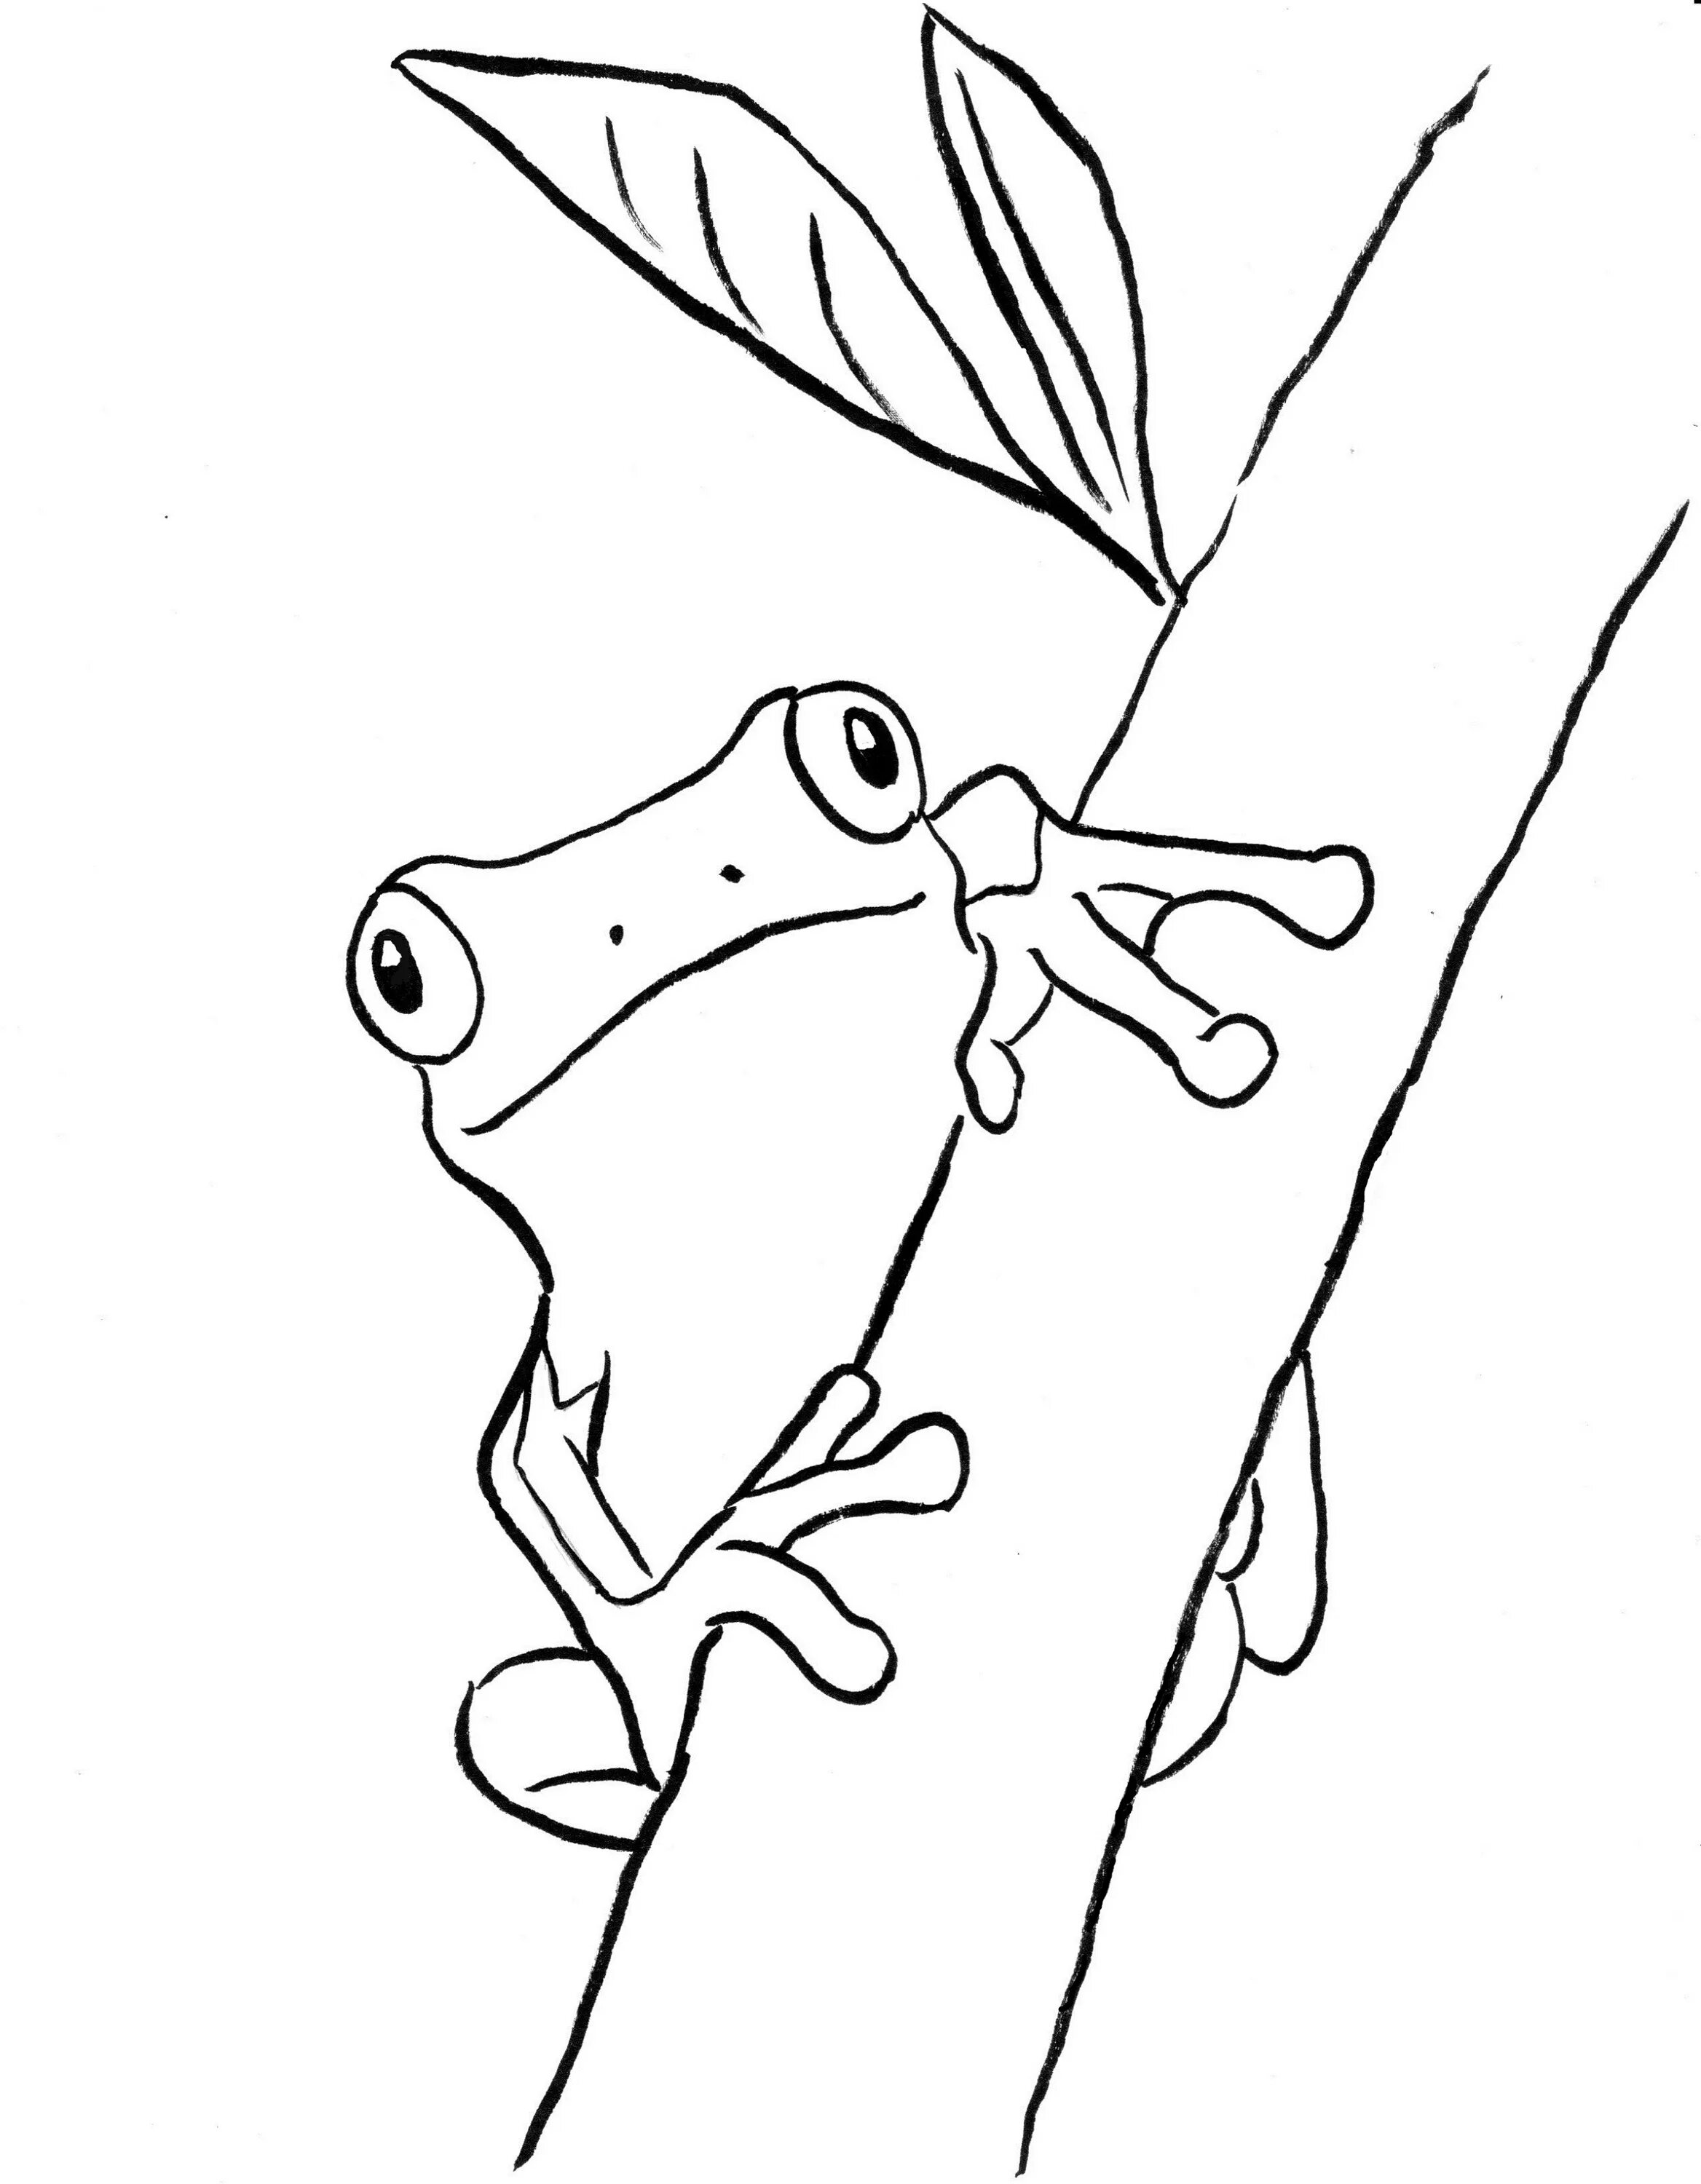 Frog #4